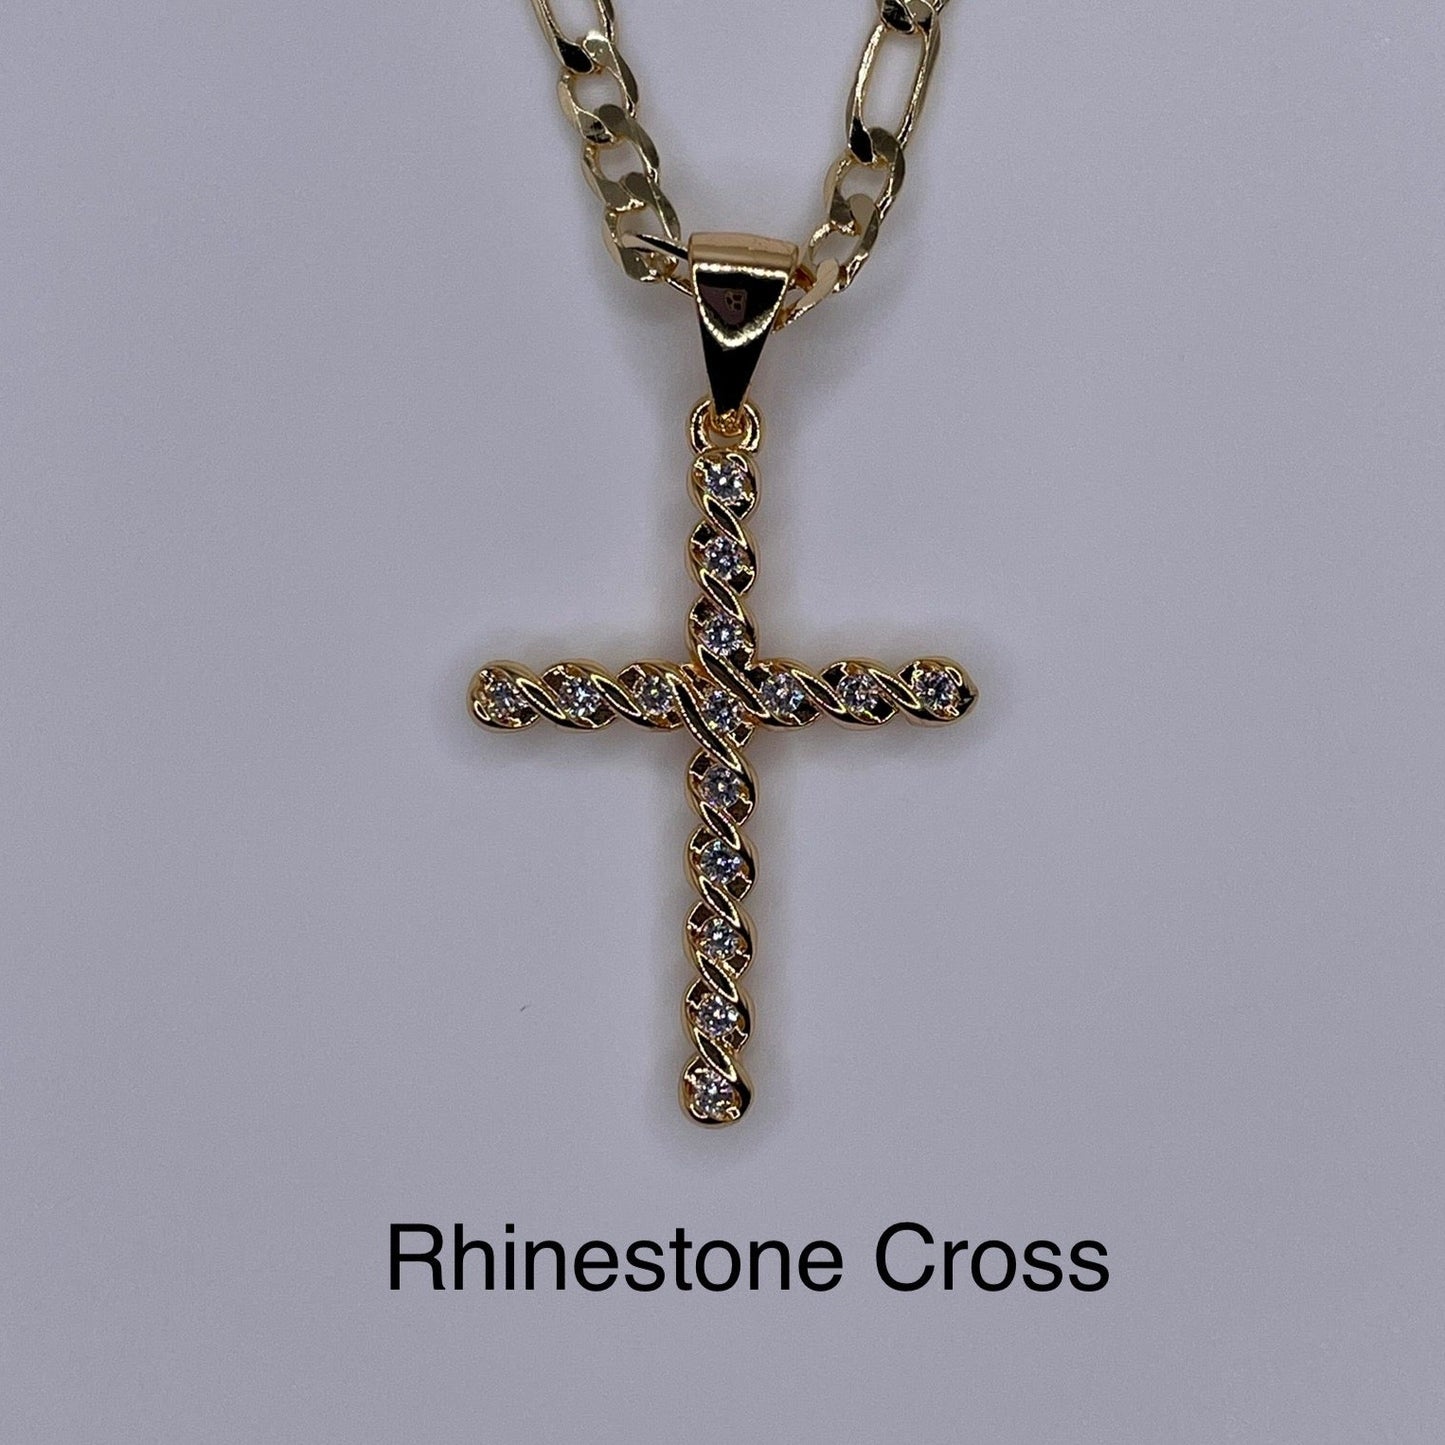 Gold plated rhinestone cross pendant. Cross pendant. Gold cross pendant.